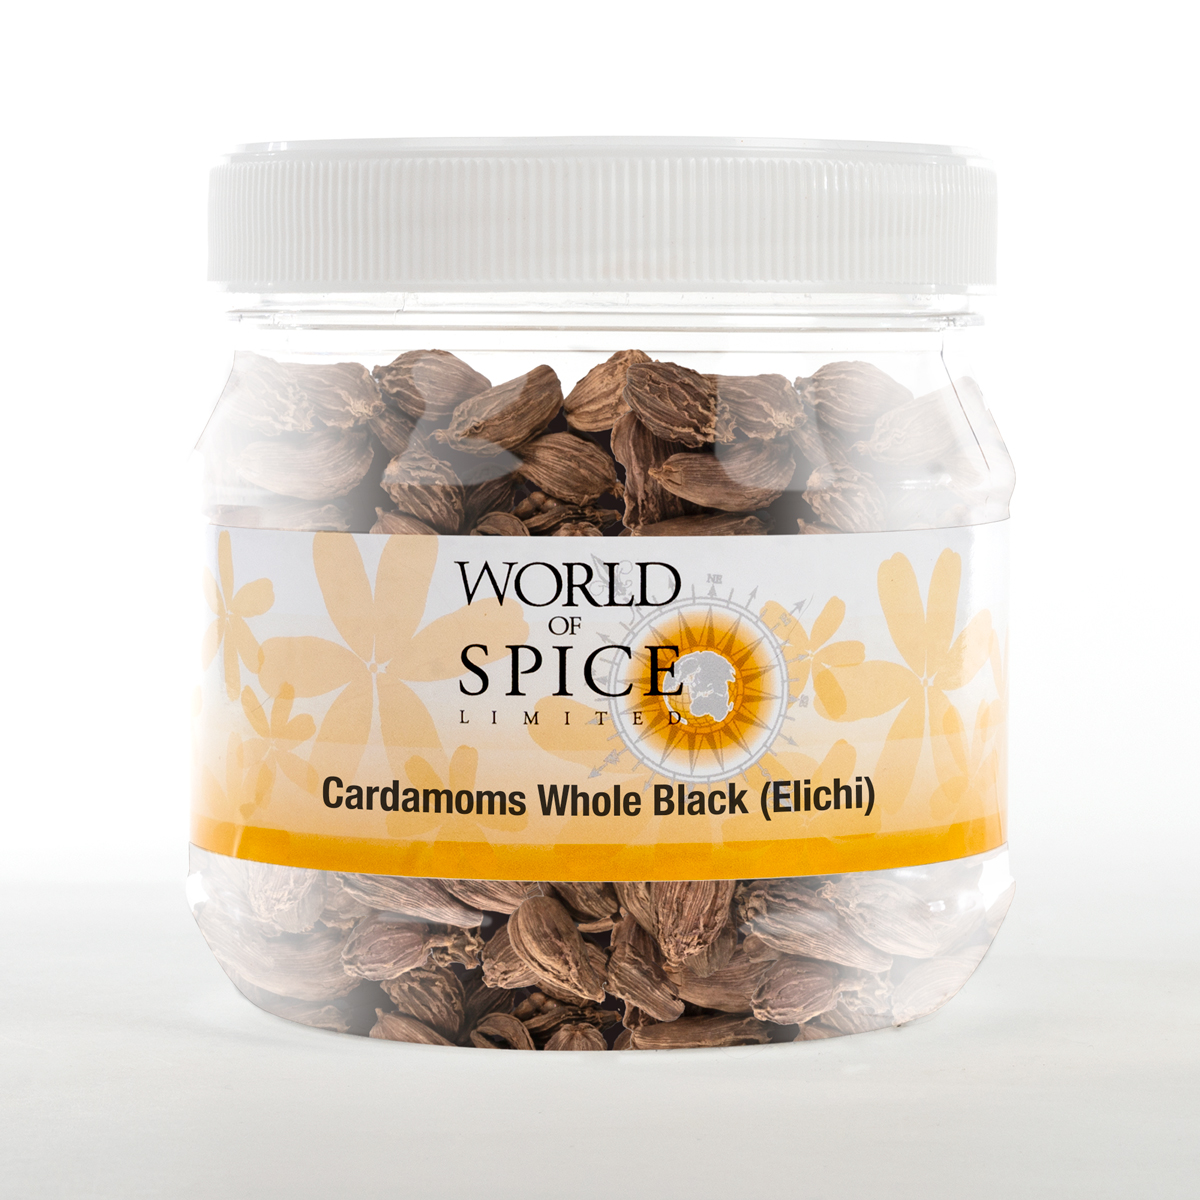 Restaurant Spice Suppliers - Tub of Cardamoms Whole Black (Elichi)